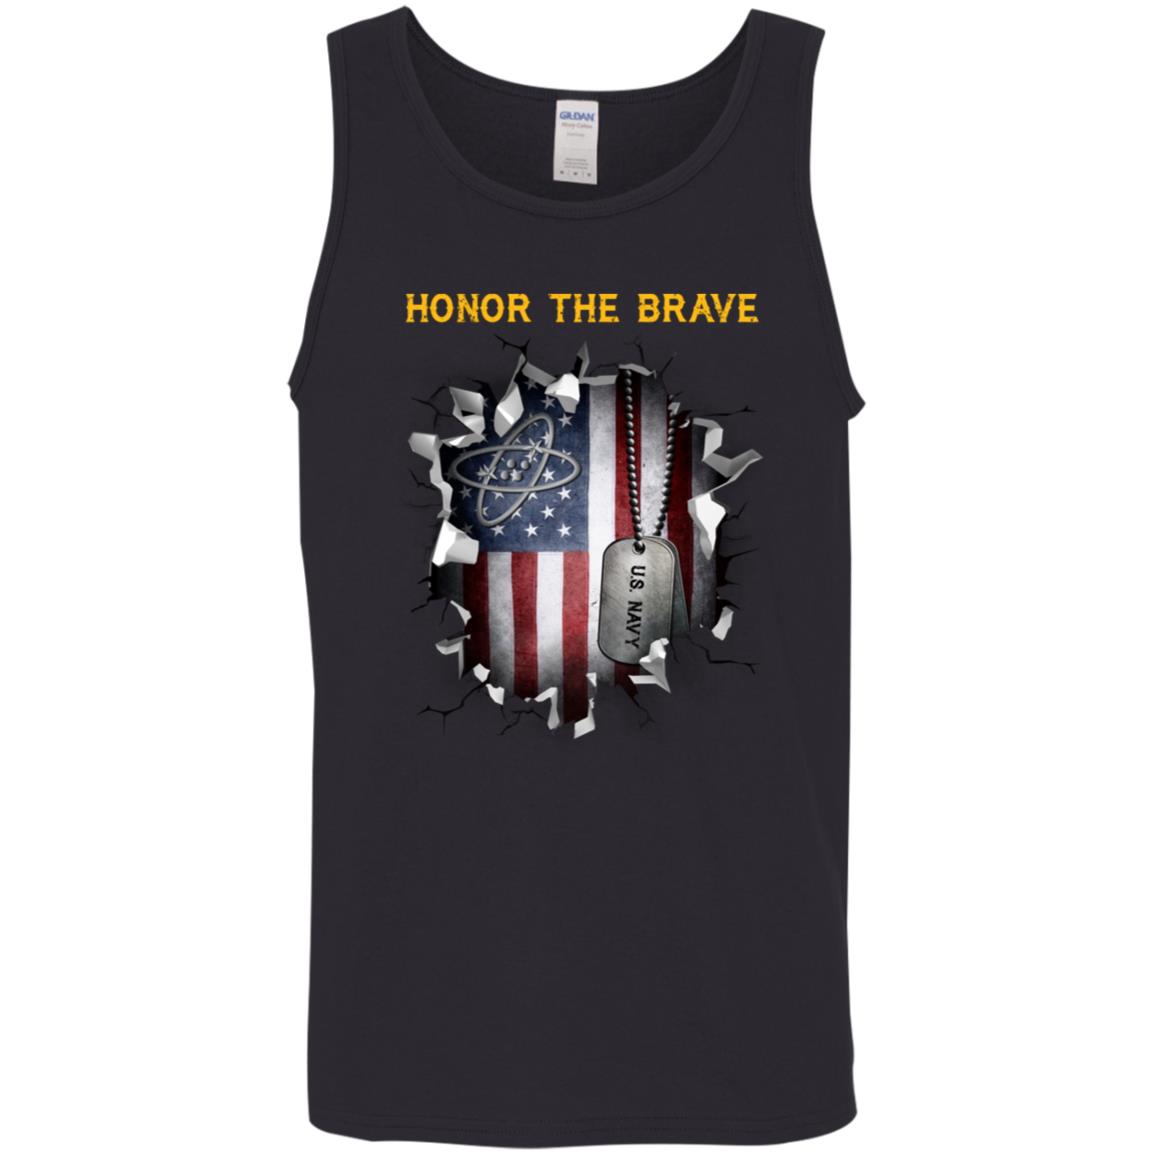 U.S Navy Electronics technician Navy ET - Honor The Brave Front Shirt